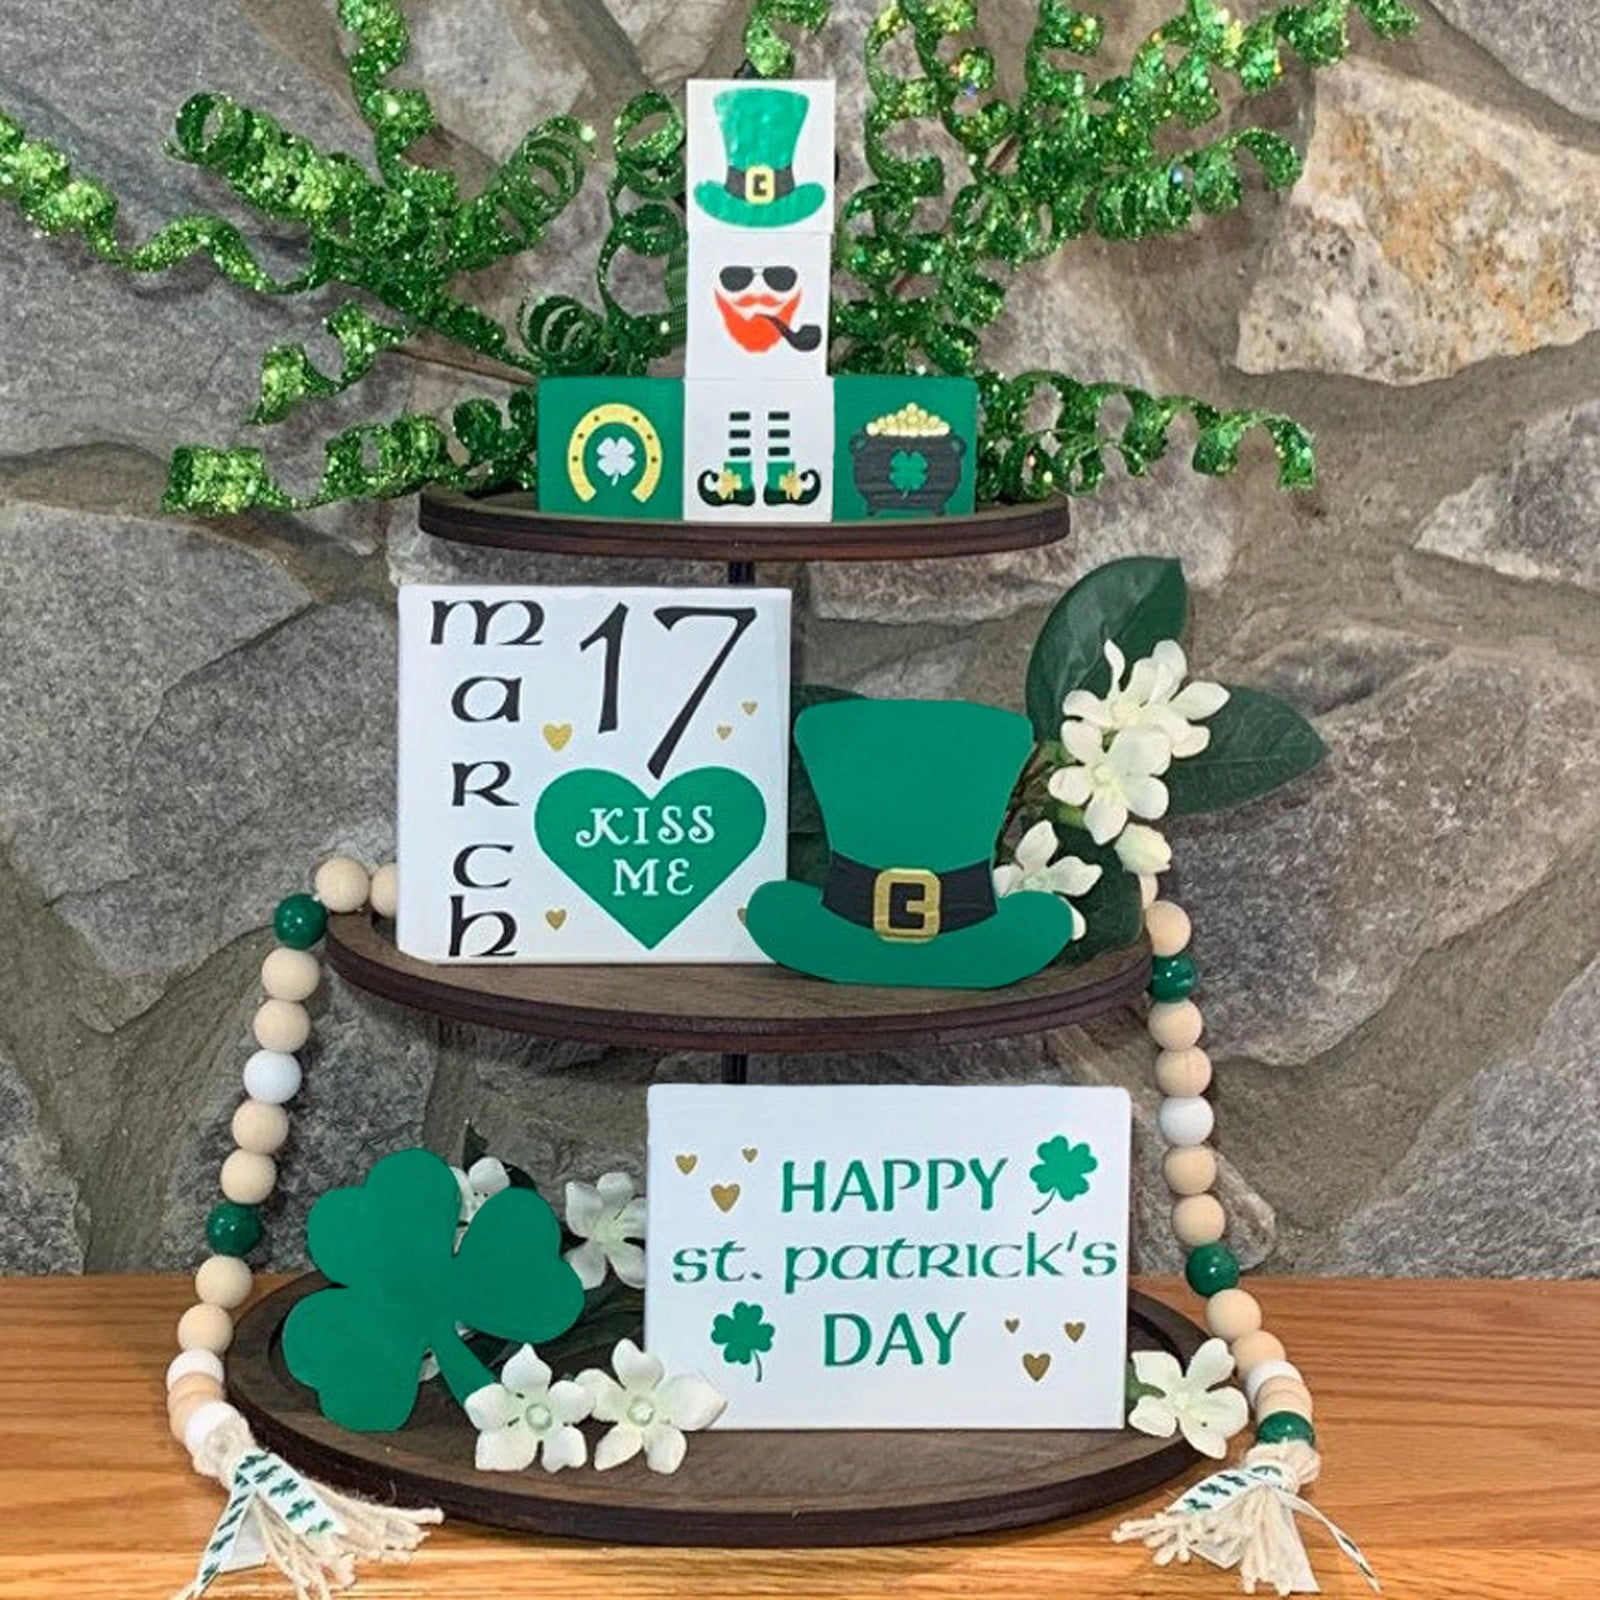 St Patrick’s Day tiered tray set decor